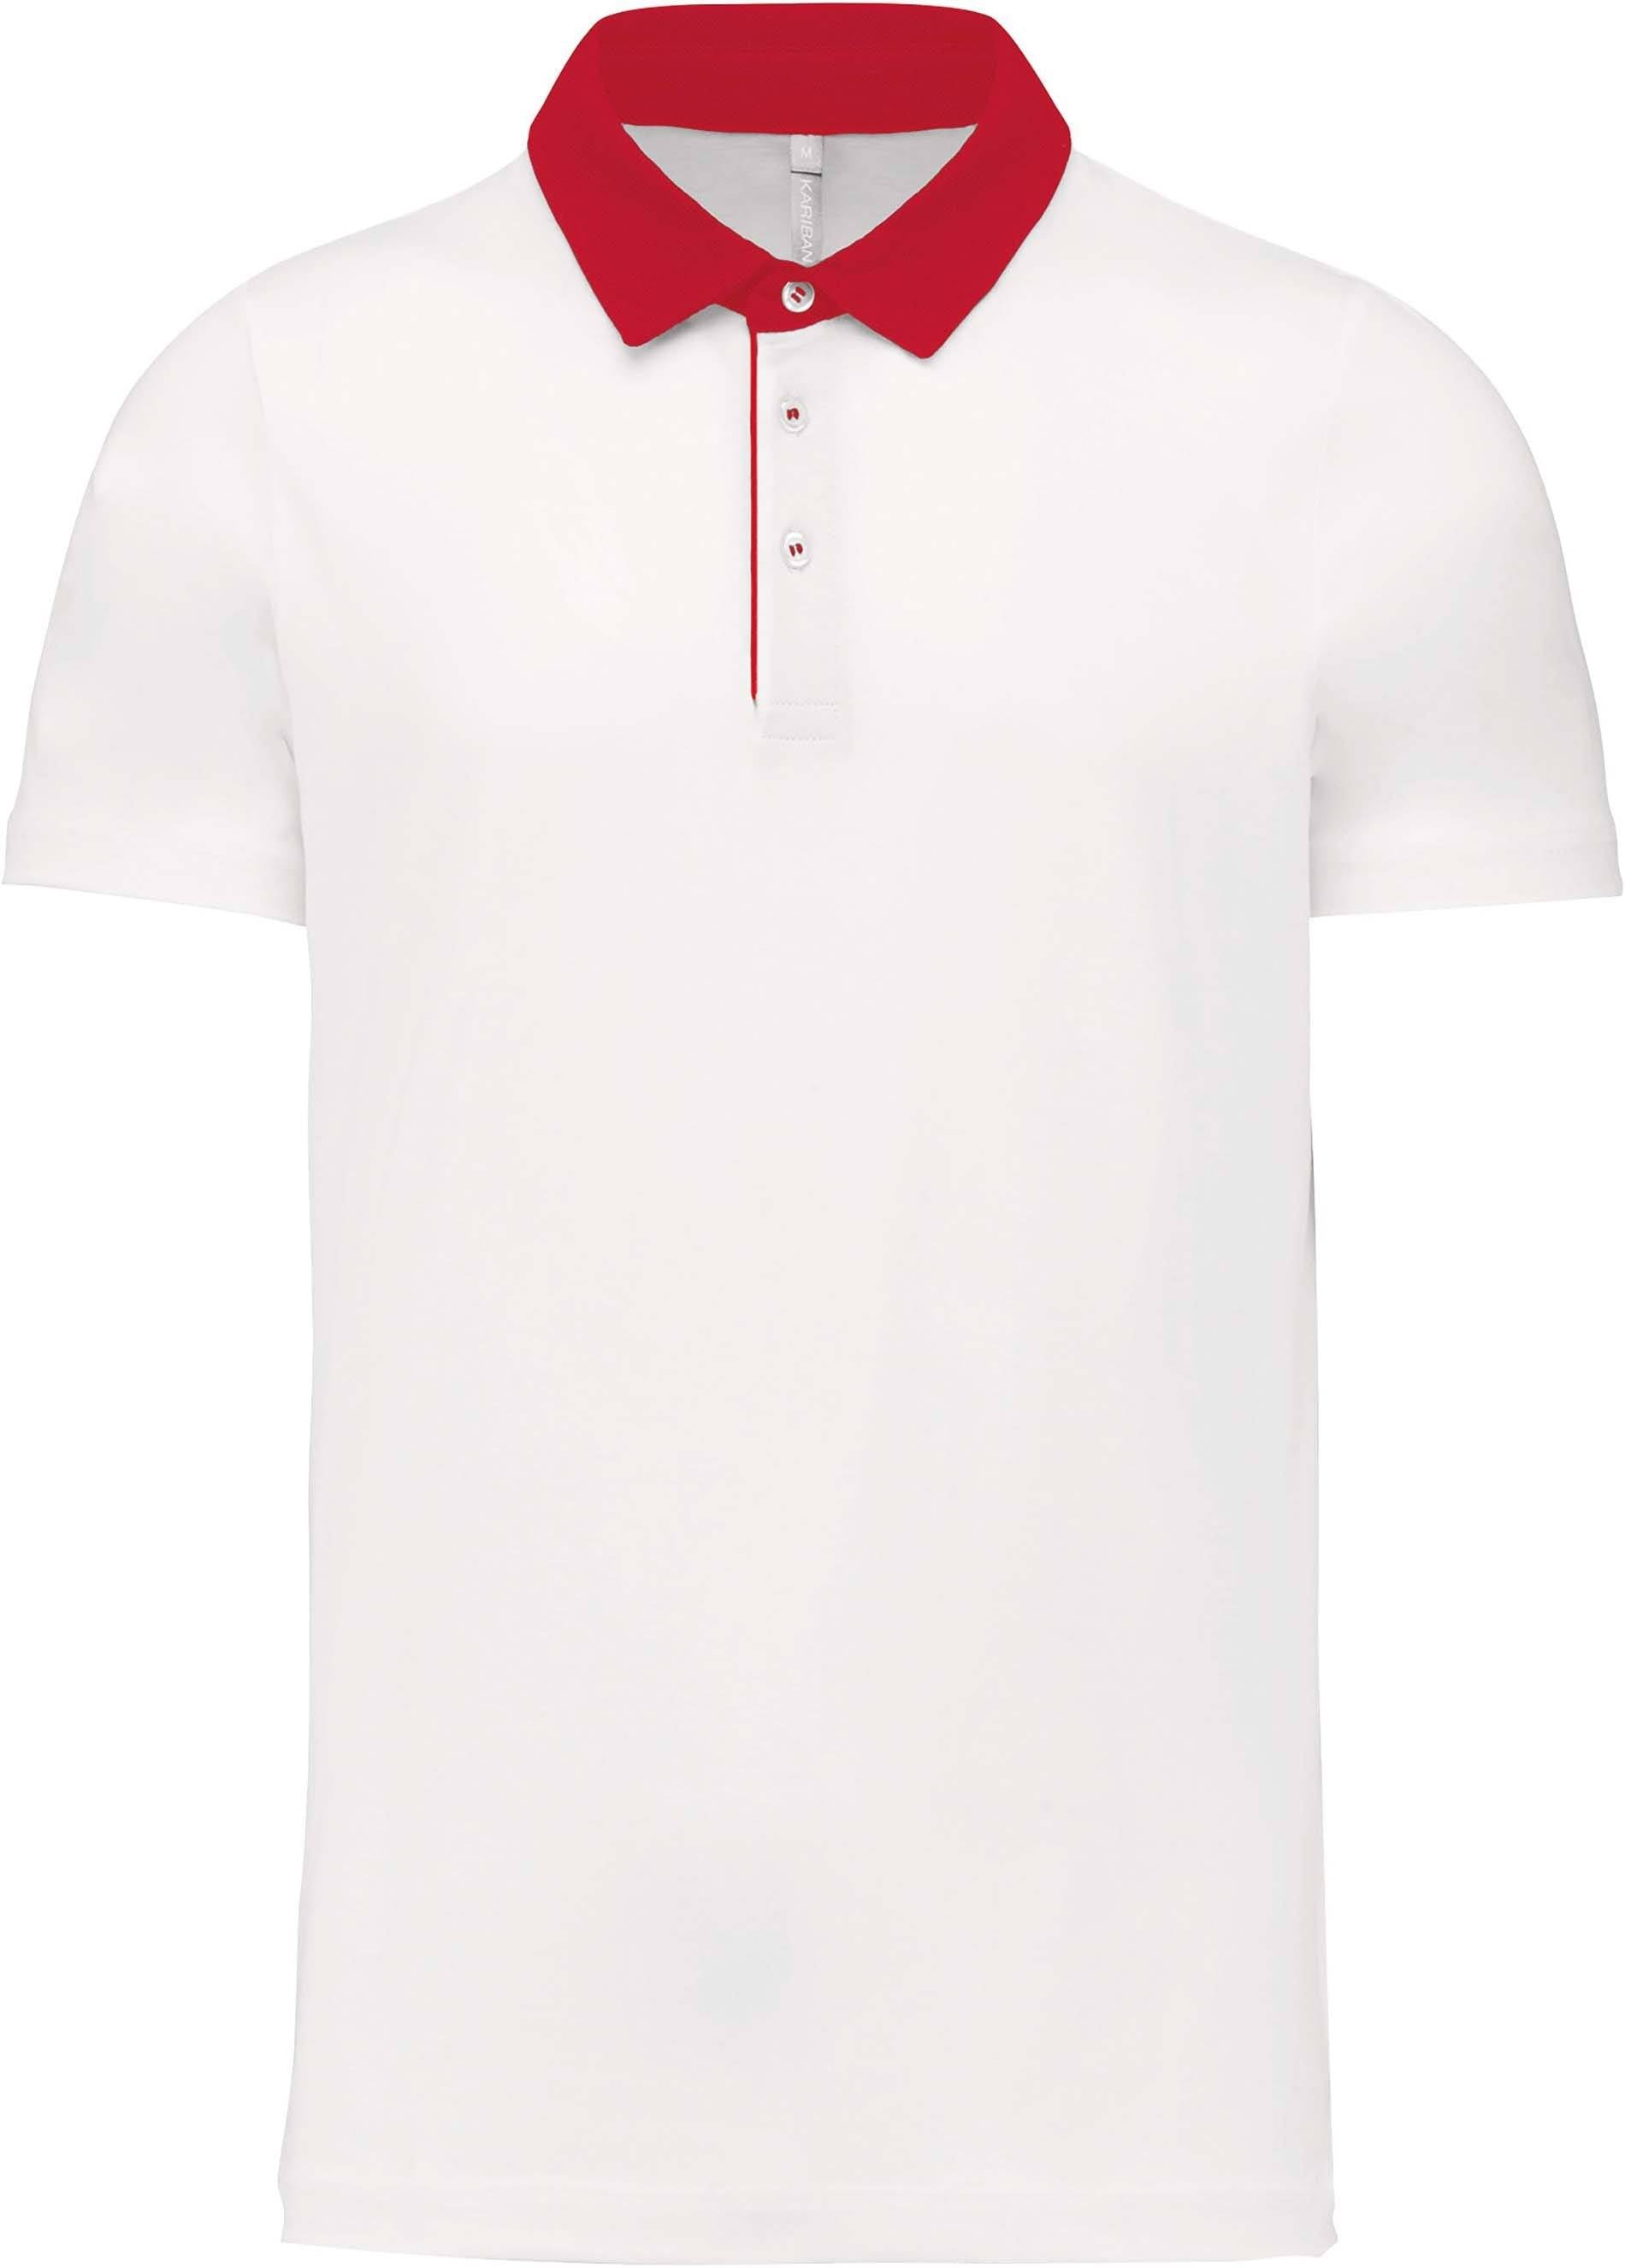 Polo personnalisé bi color - K260 polo homme Kariban blanc/rouge S 